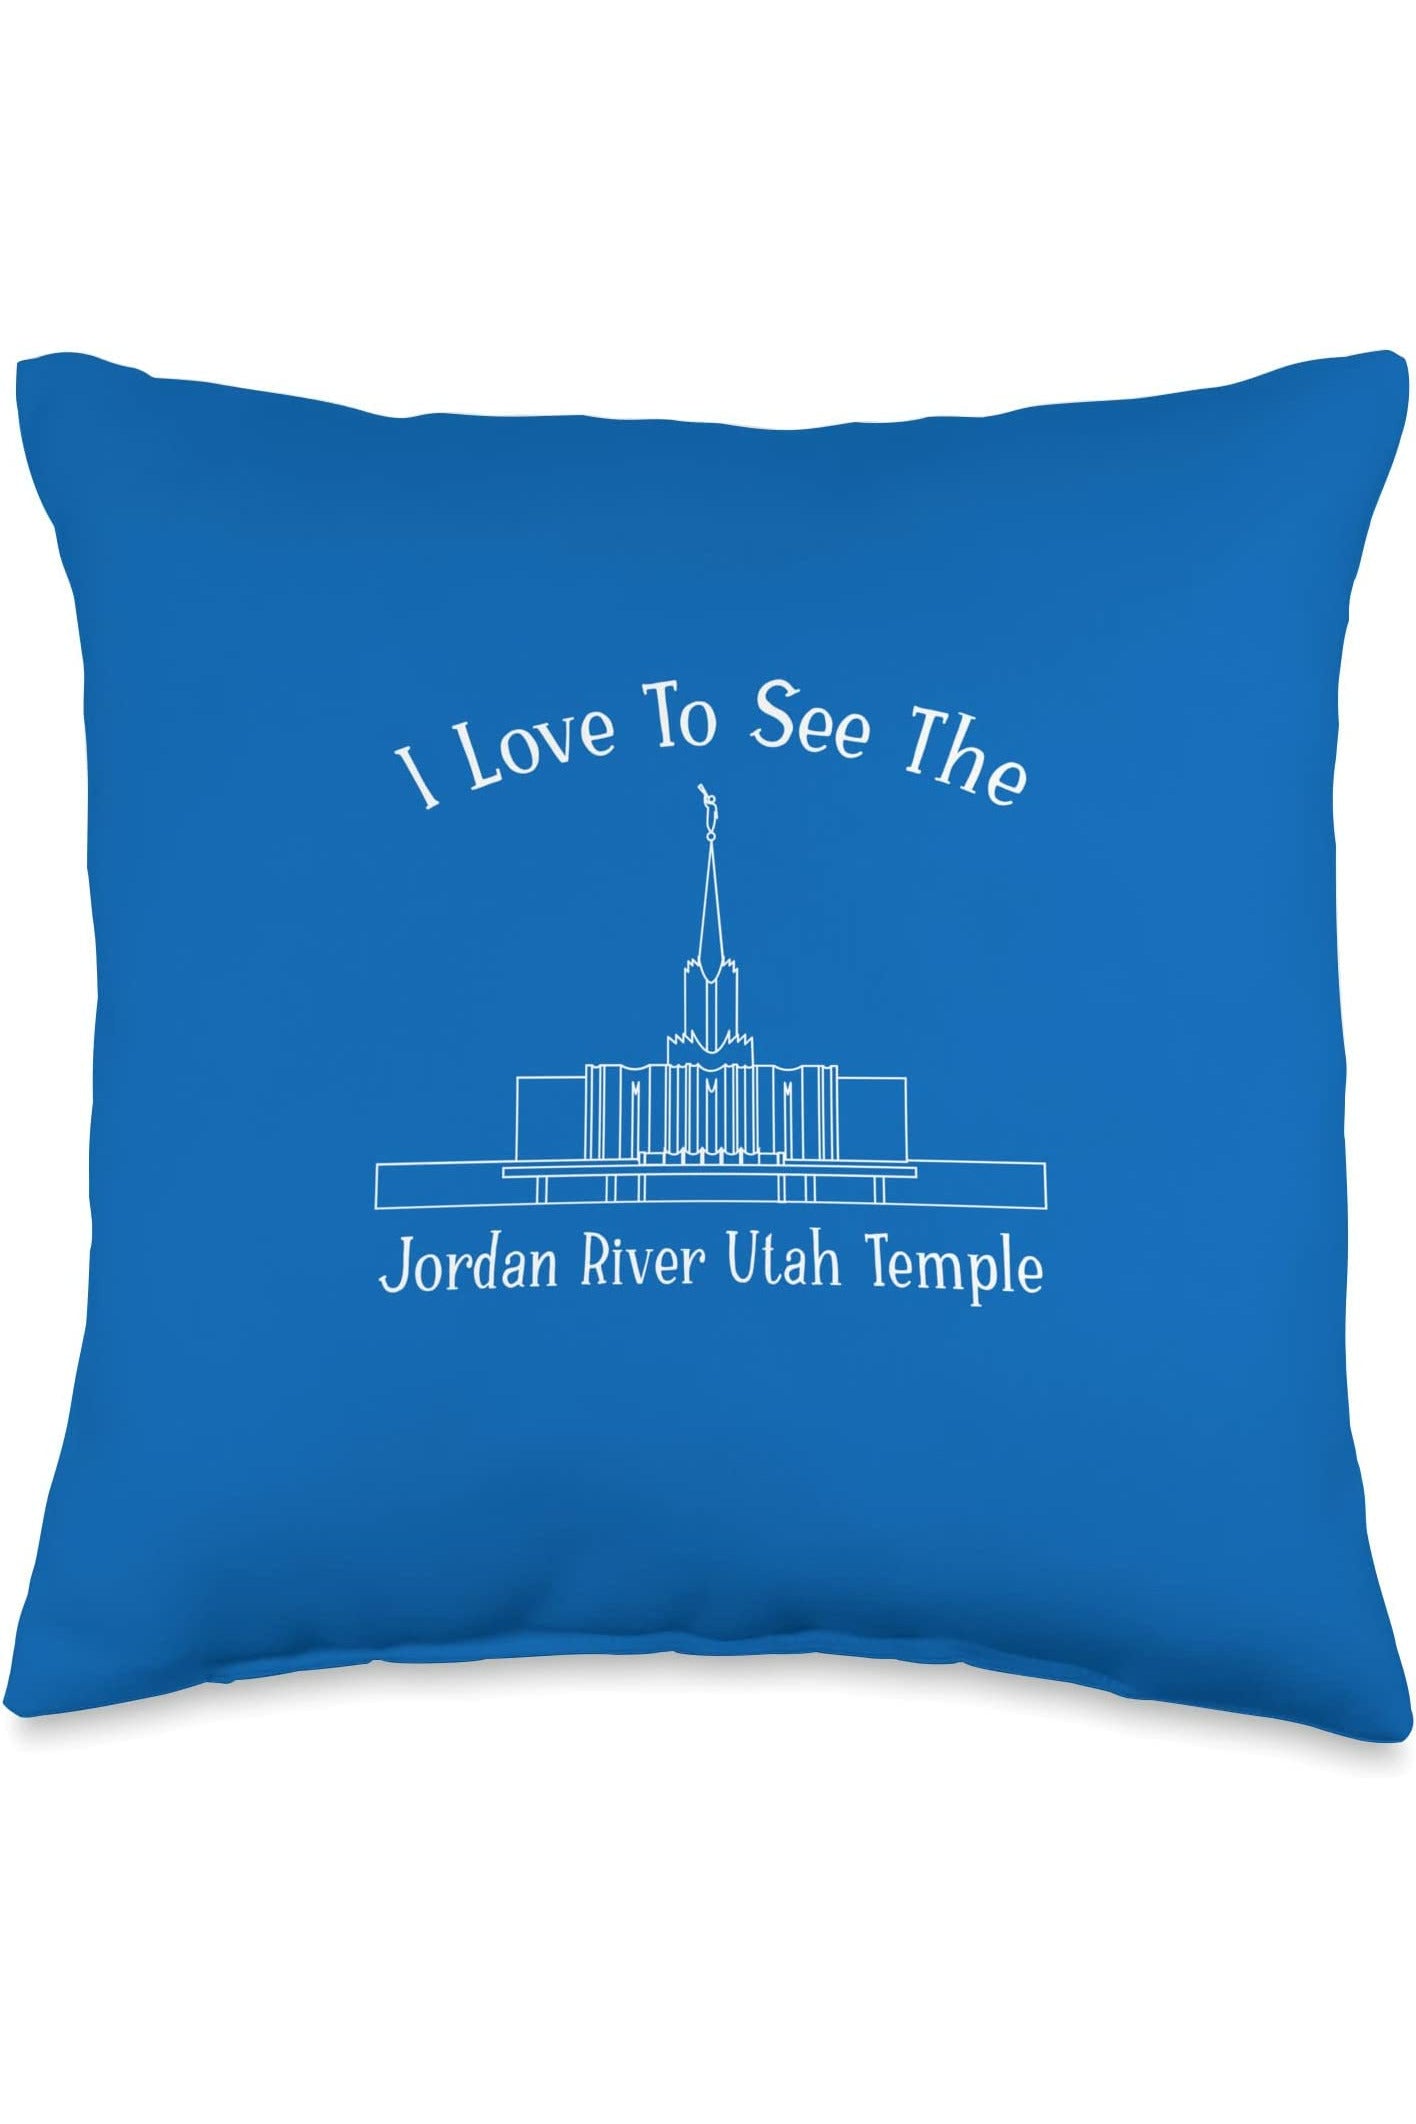 Jordan River Utah Temple Throw Pillows - Happy Style (English) US